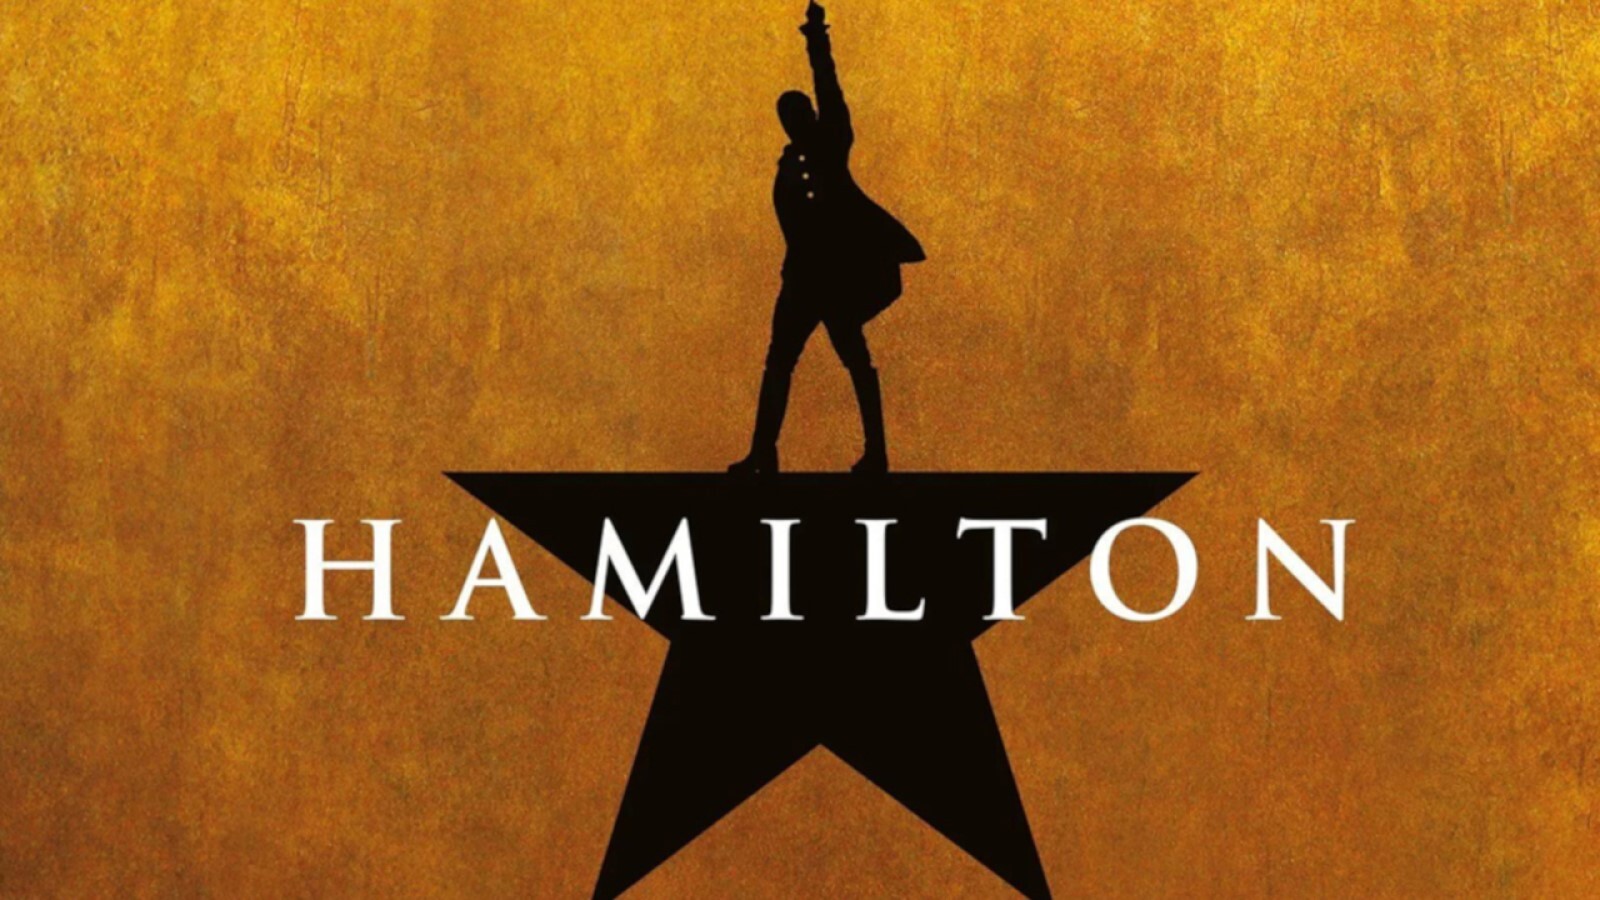 How to Watch 'Hamilton' Online - Stream the Musical | TechNadu